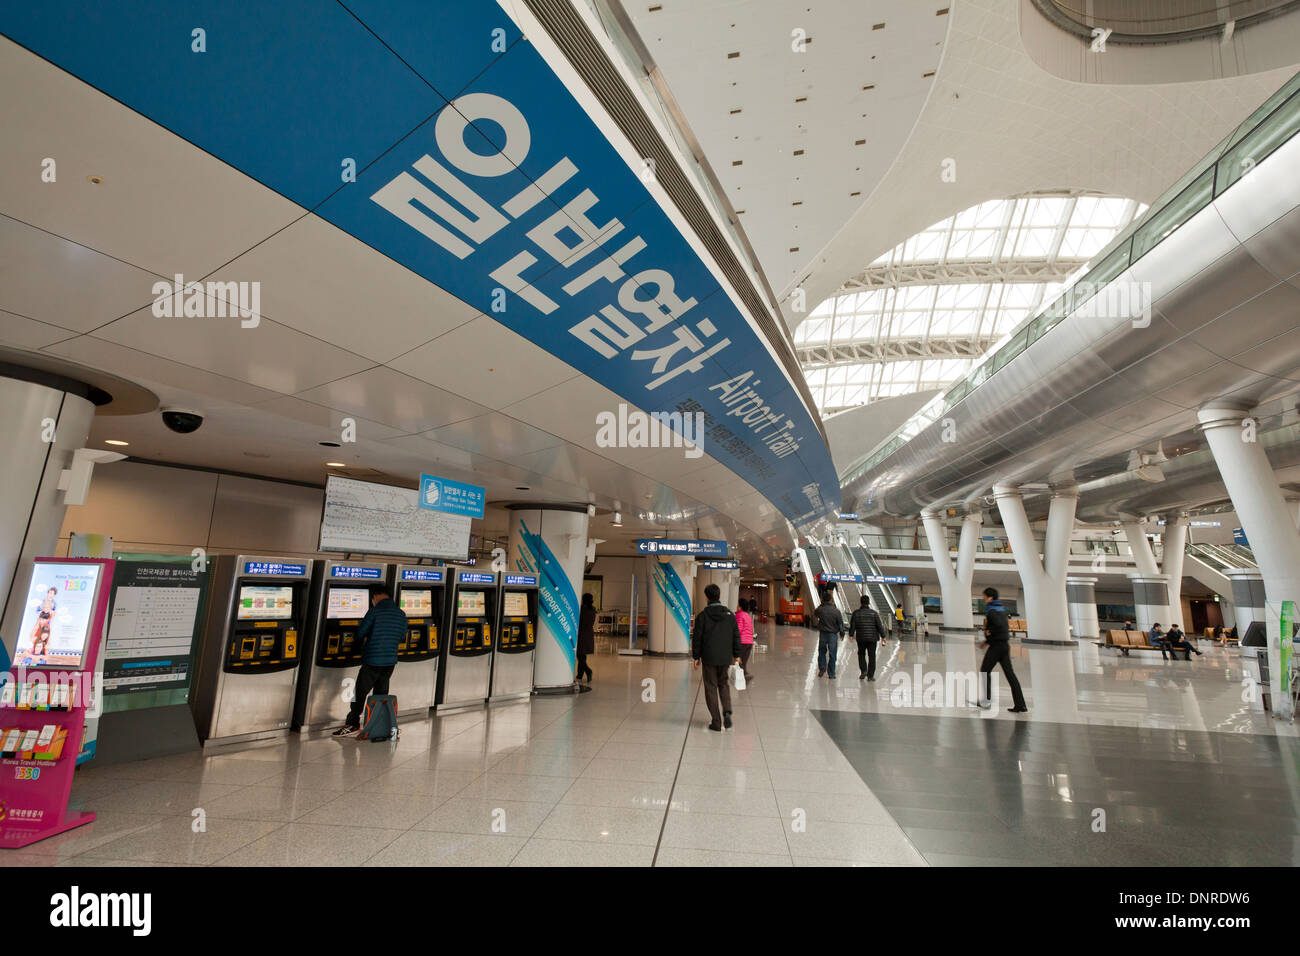 Korail Airport Bahnhof Eingang - internationalen Flughafen Incheon, Südkorea Stockfoto